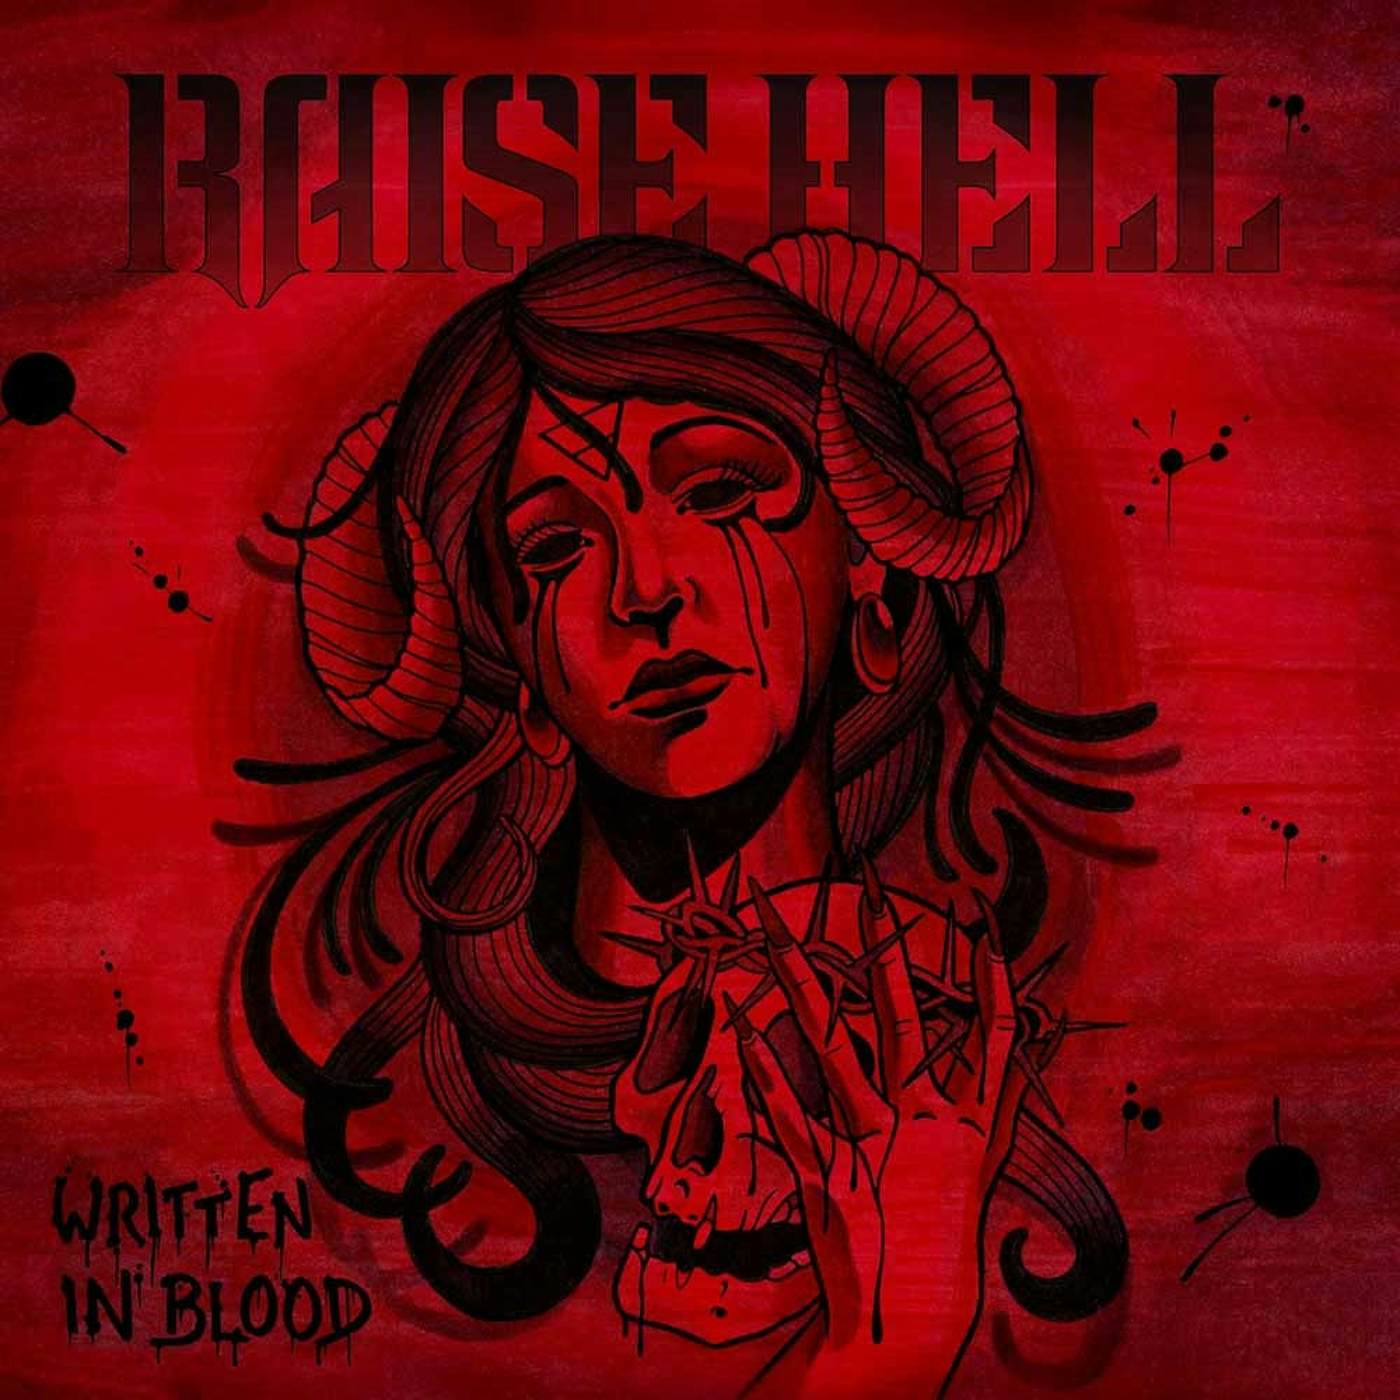 Raise Hell LP - Written In Blood (Vinyl)